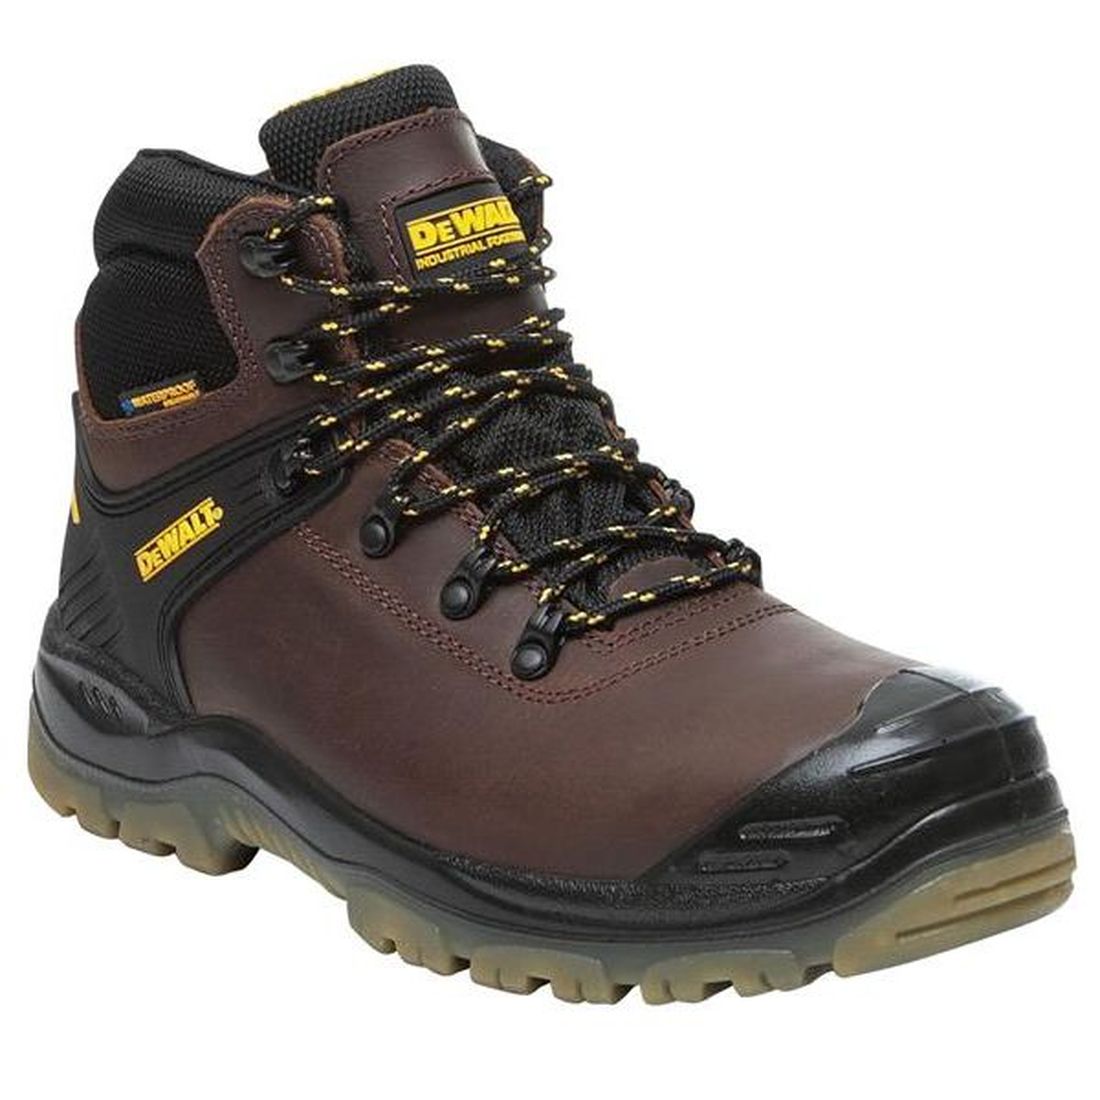 DEWALT Newark S3 Waterproof Safety Hiker Boots Brown UK 6 EUR 39                       